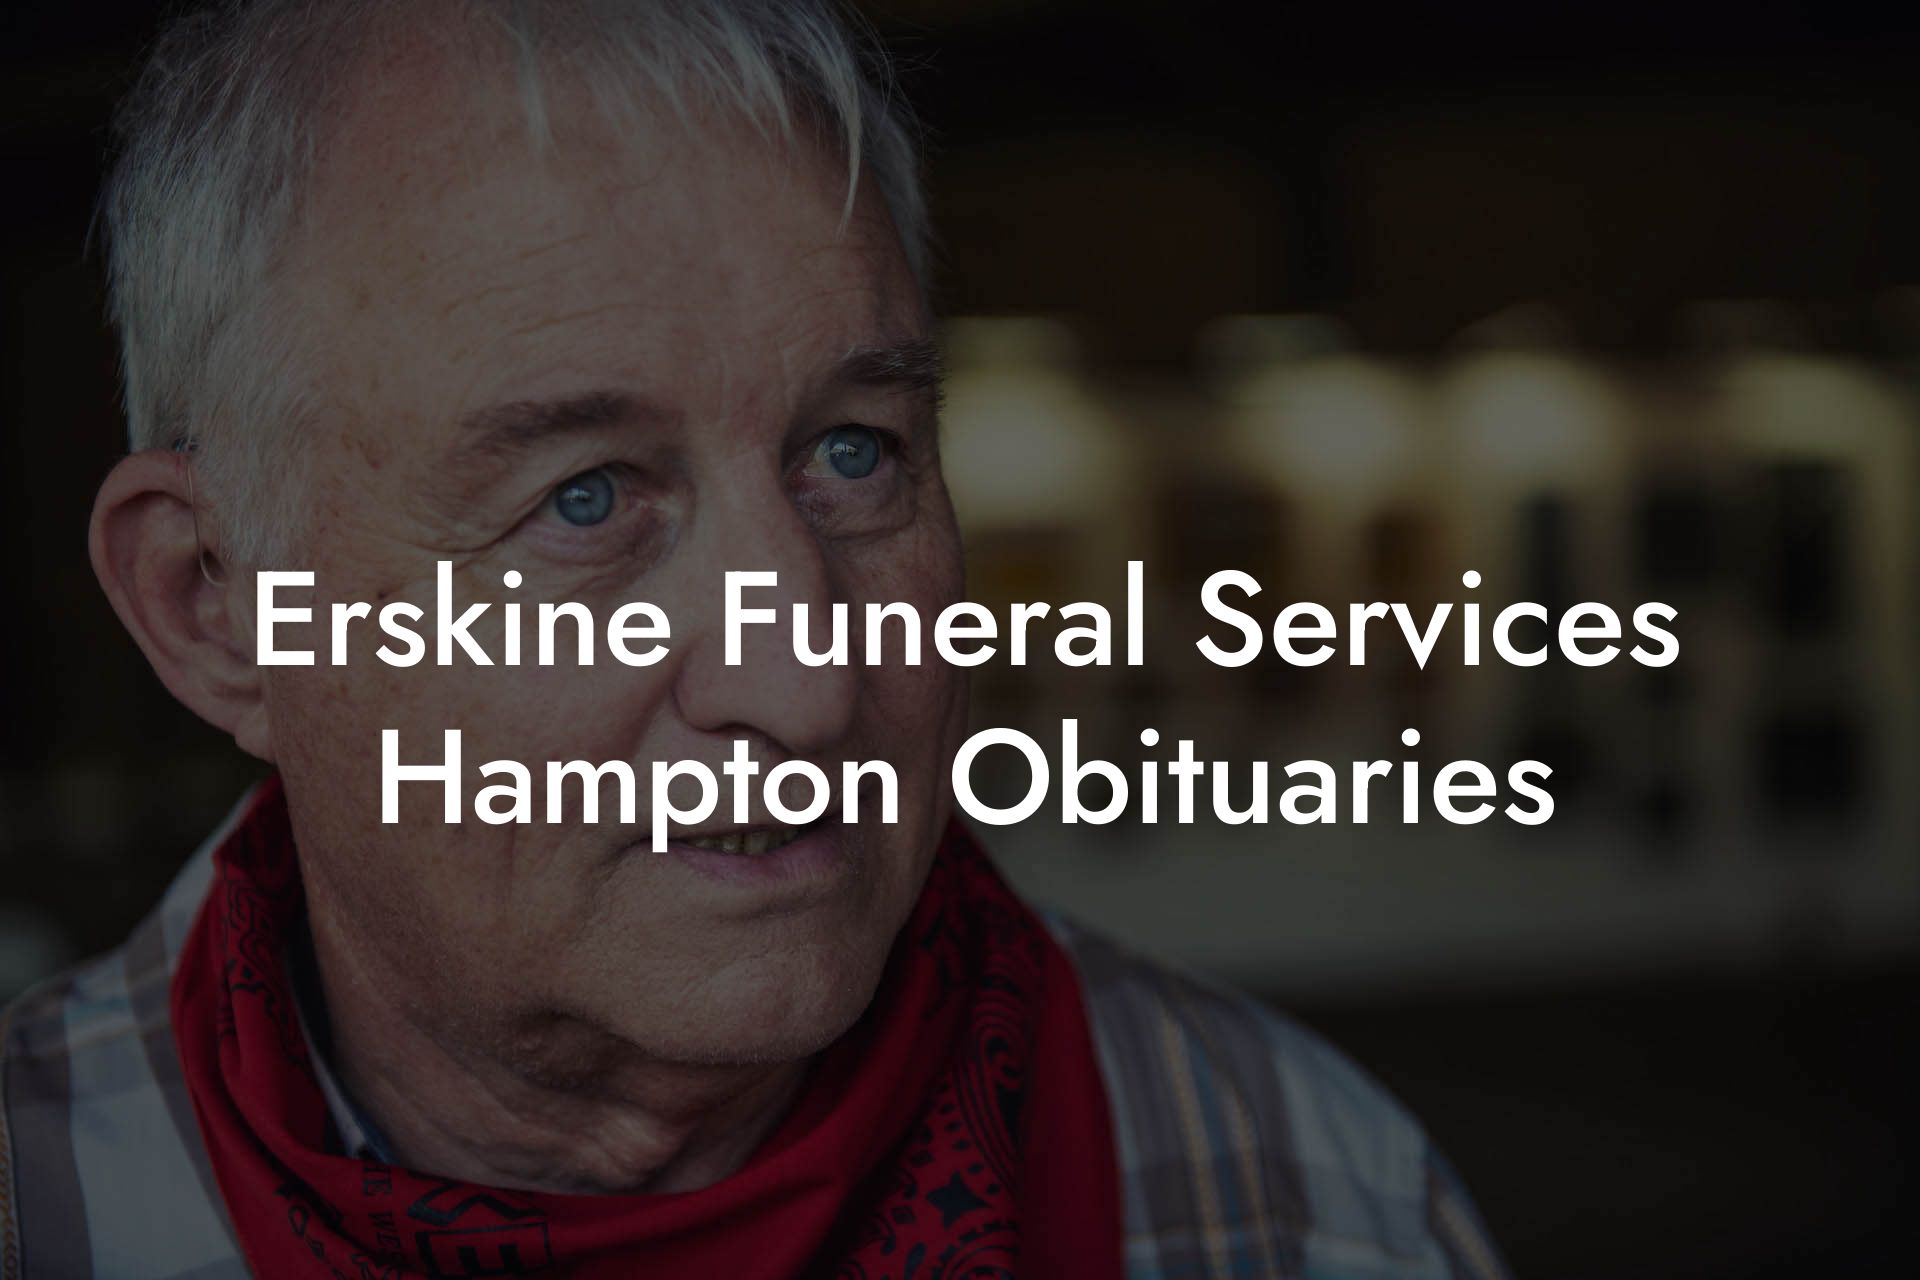 Erskine Funeral Services Hampton Obituaries